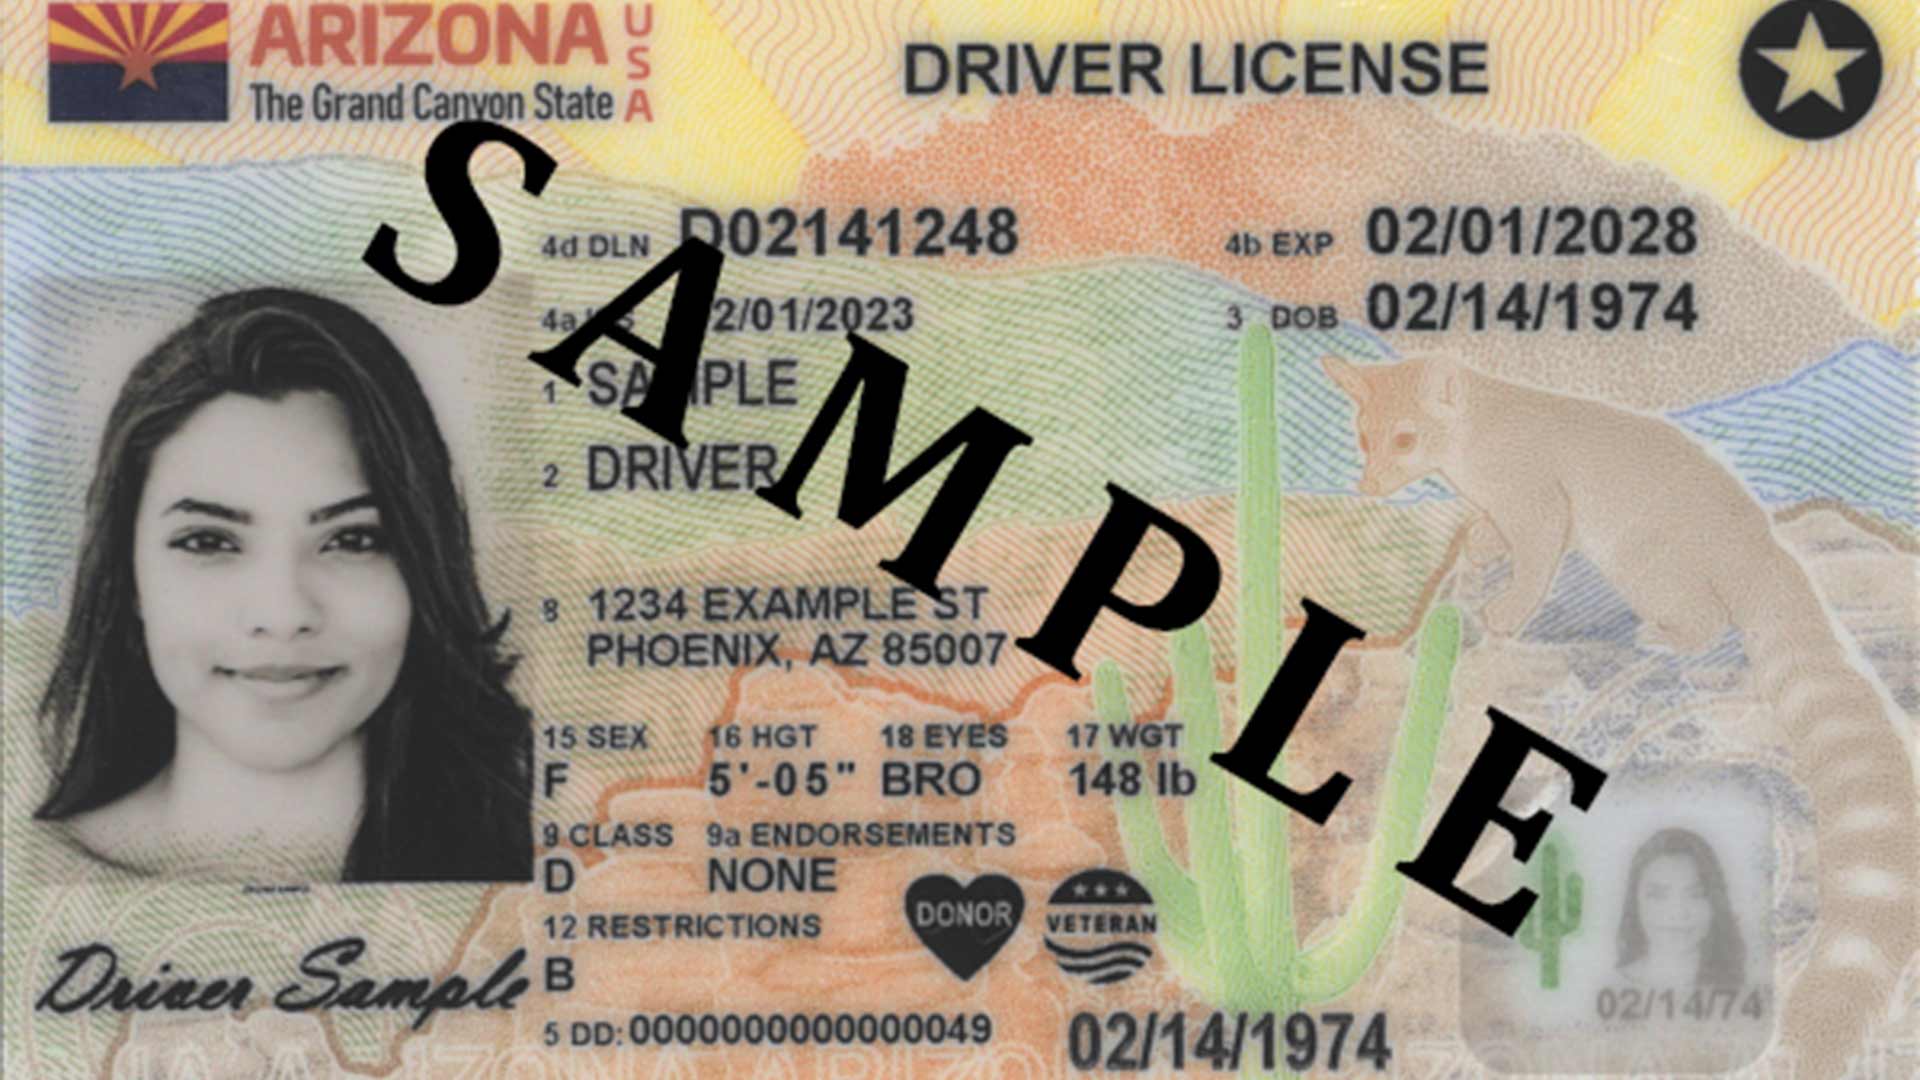 New Arizona driver license design beginning March 2023.